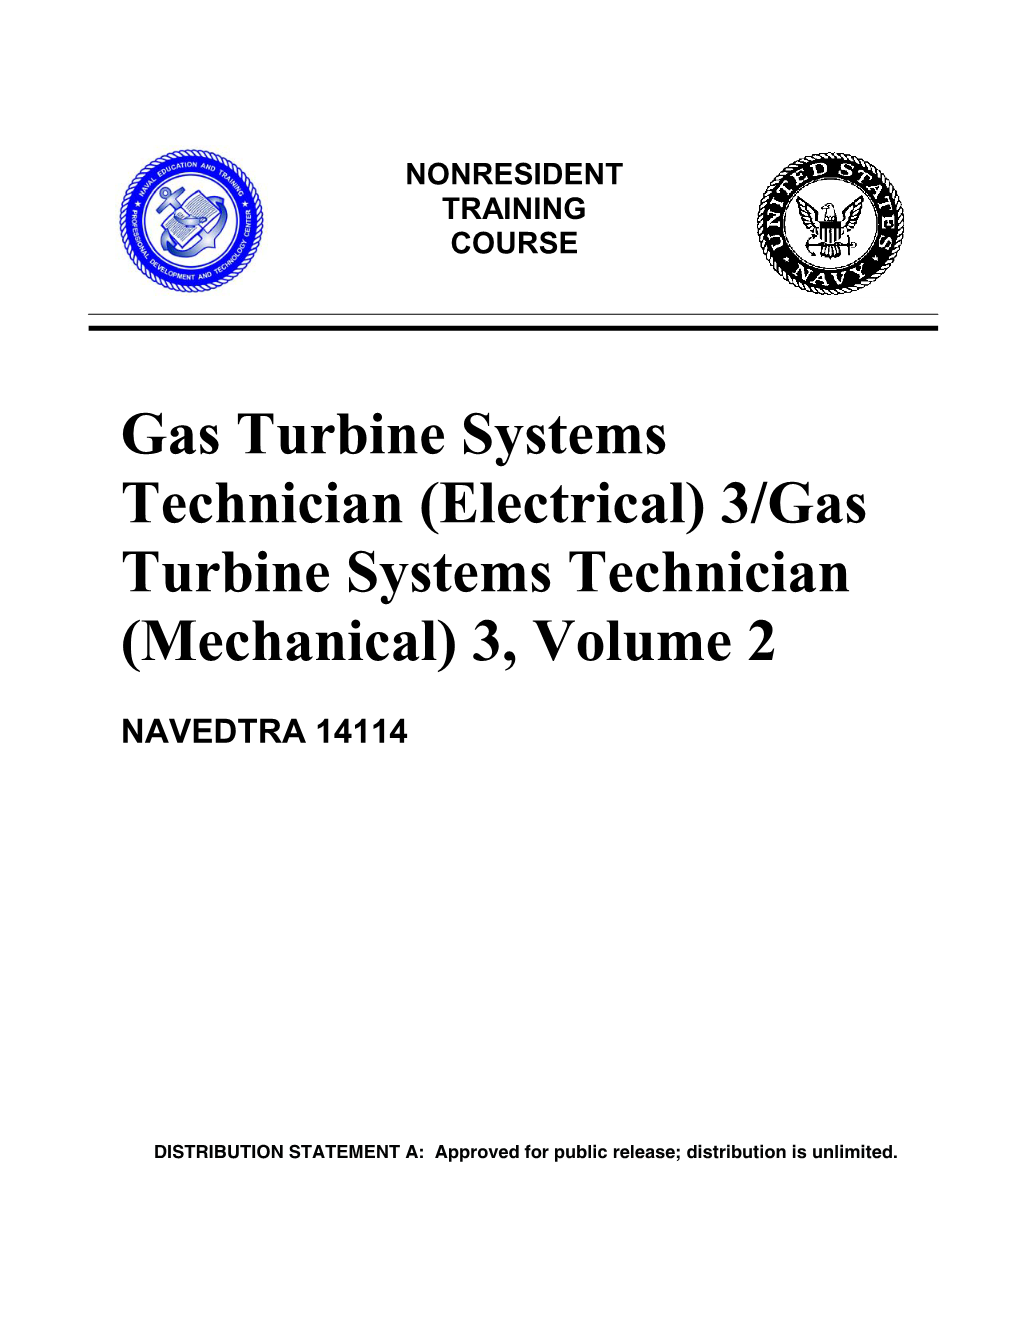 Gas Turbine Systems Technician (Electrical) 3/Gas Turbine Systems Technician (Mechanical) 3, Volume 2